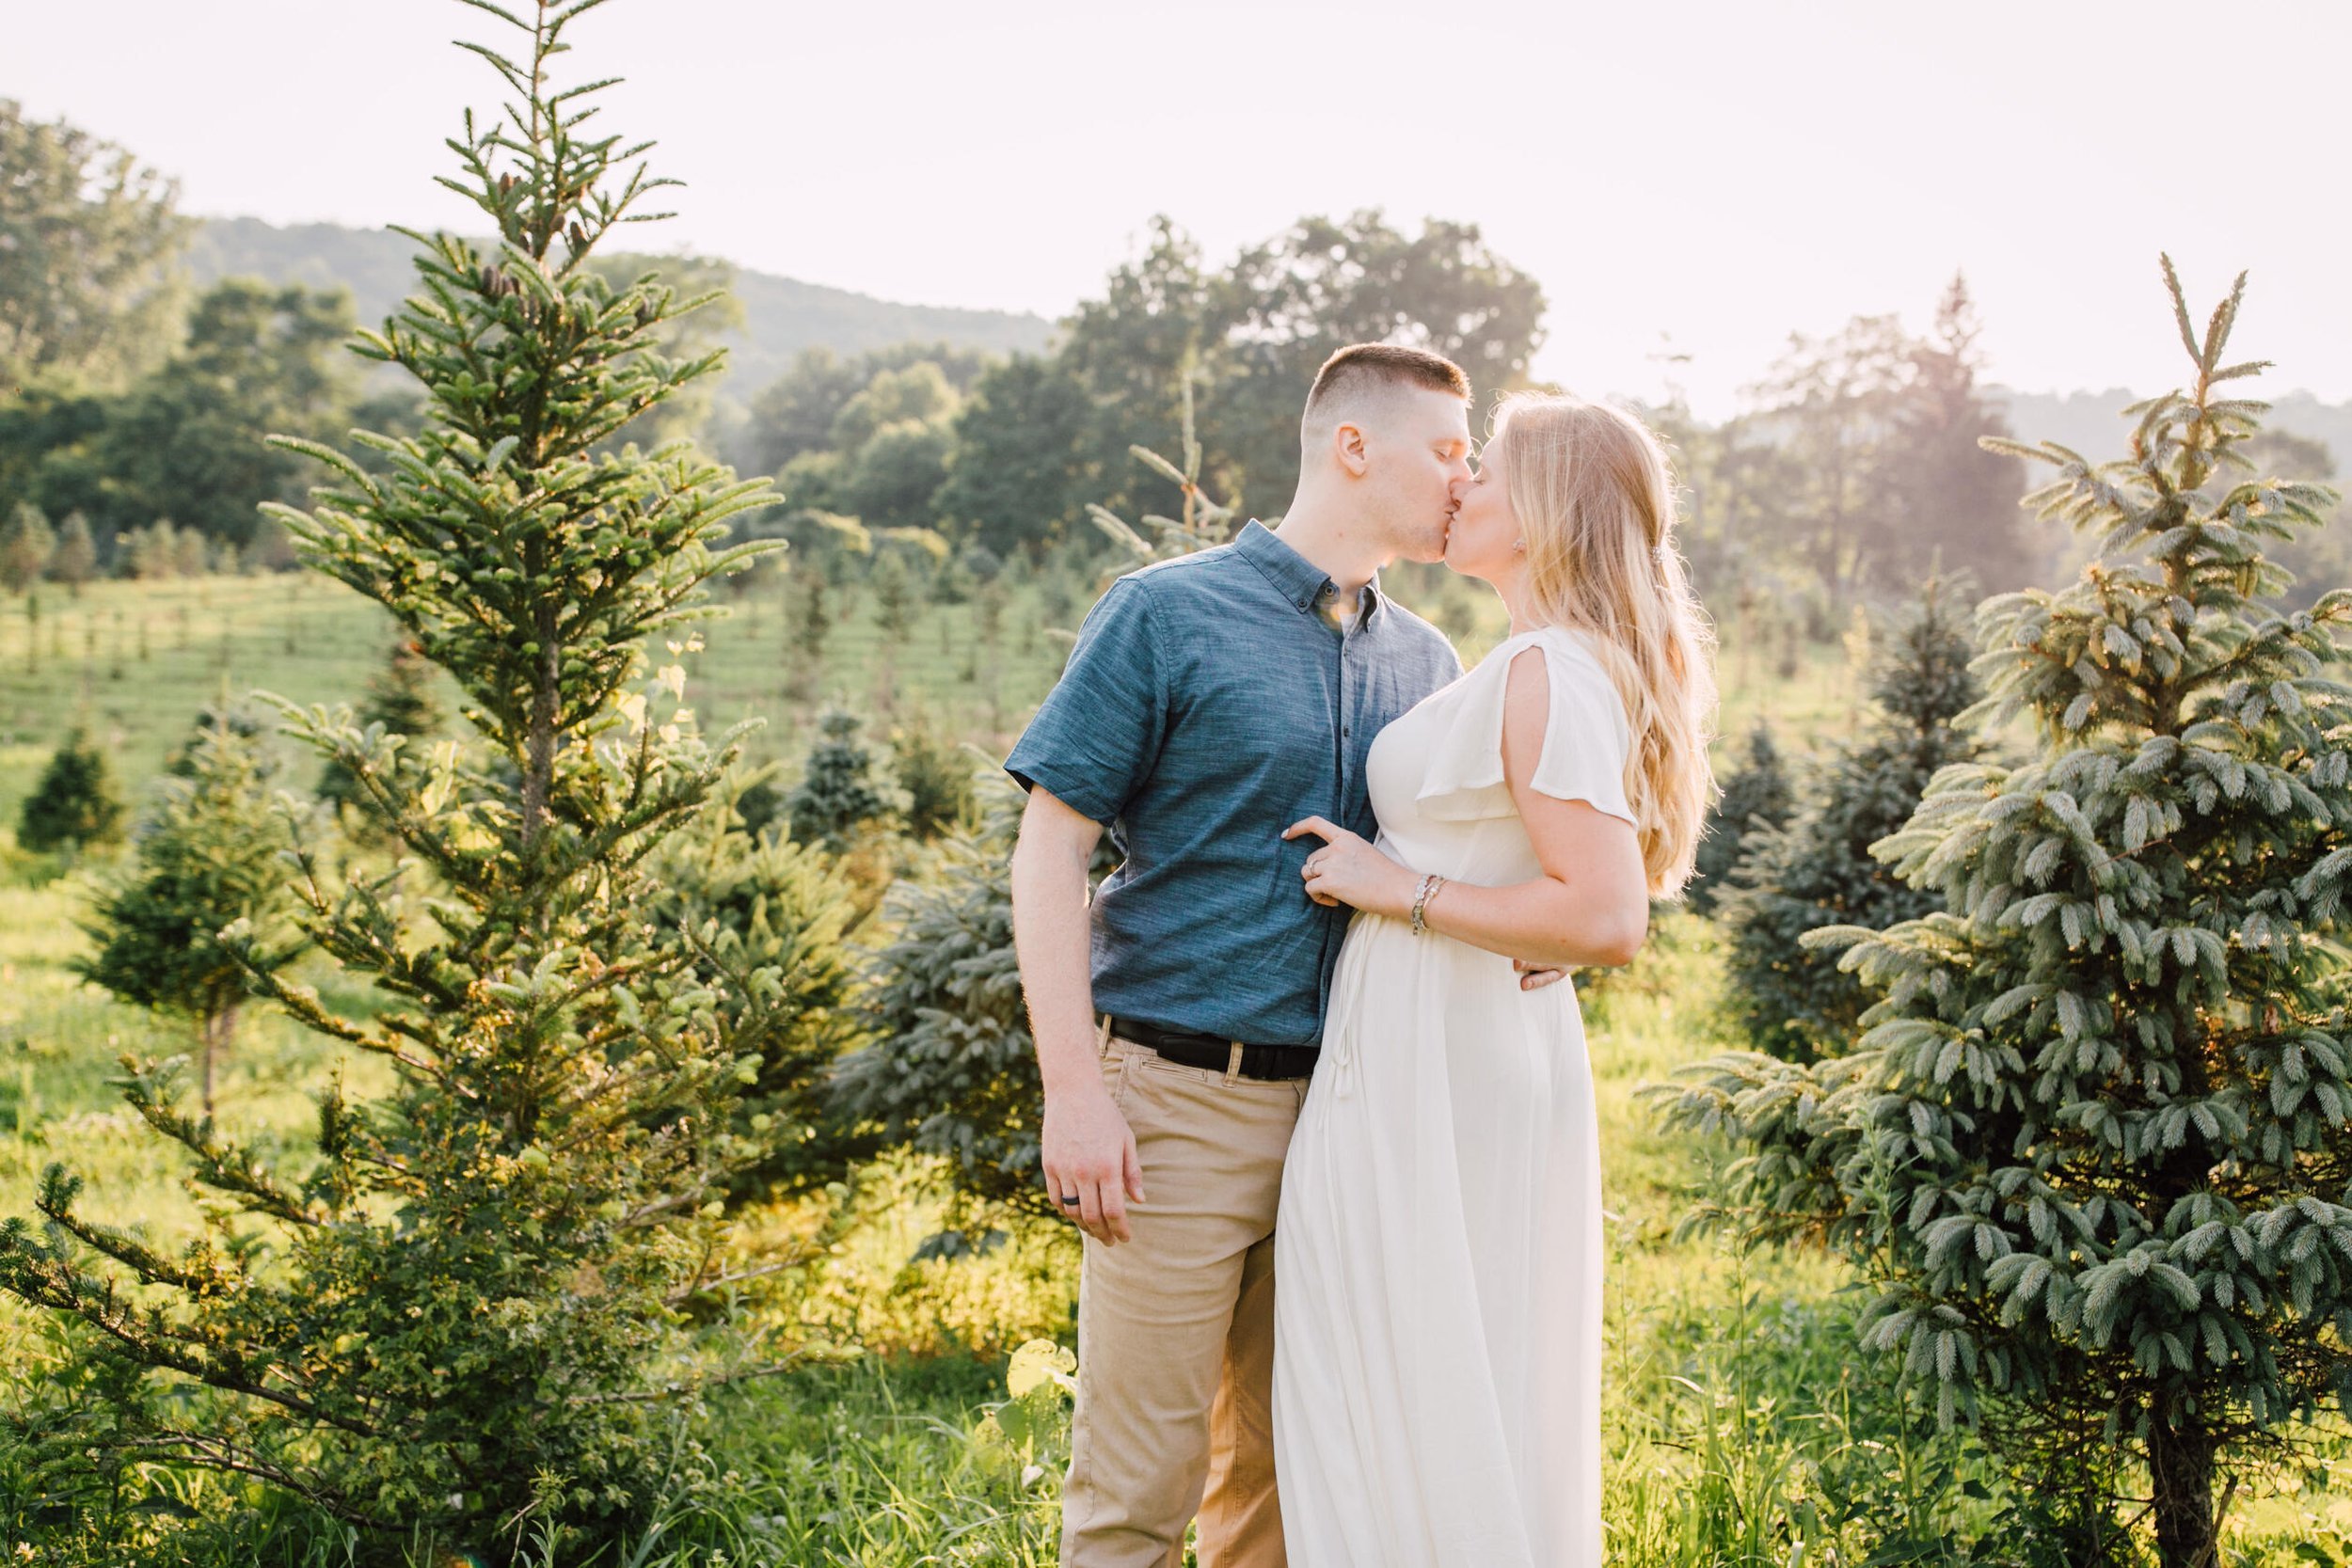  Engaged couple kiss for Christmas tree farm photos 